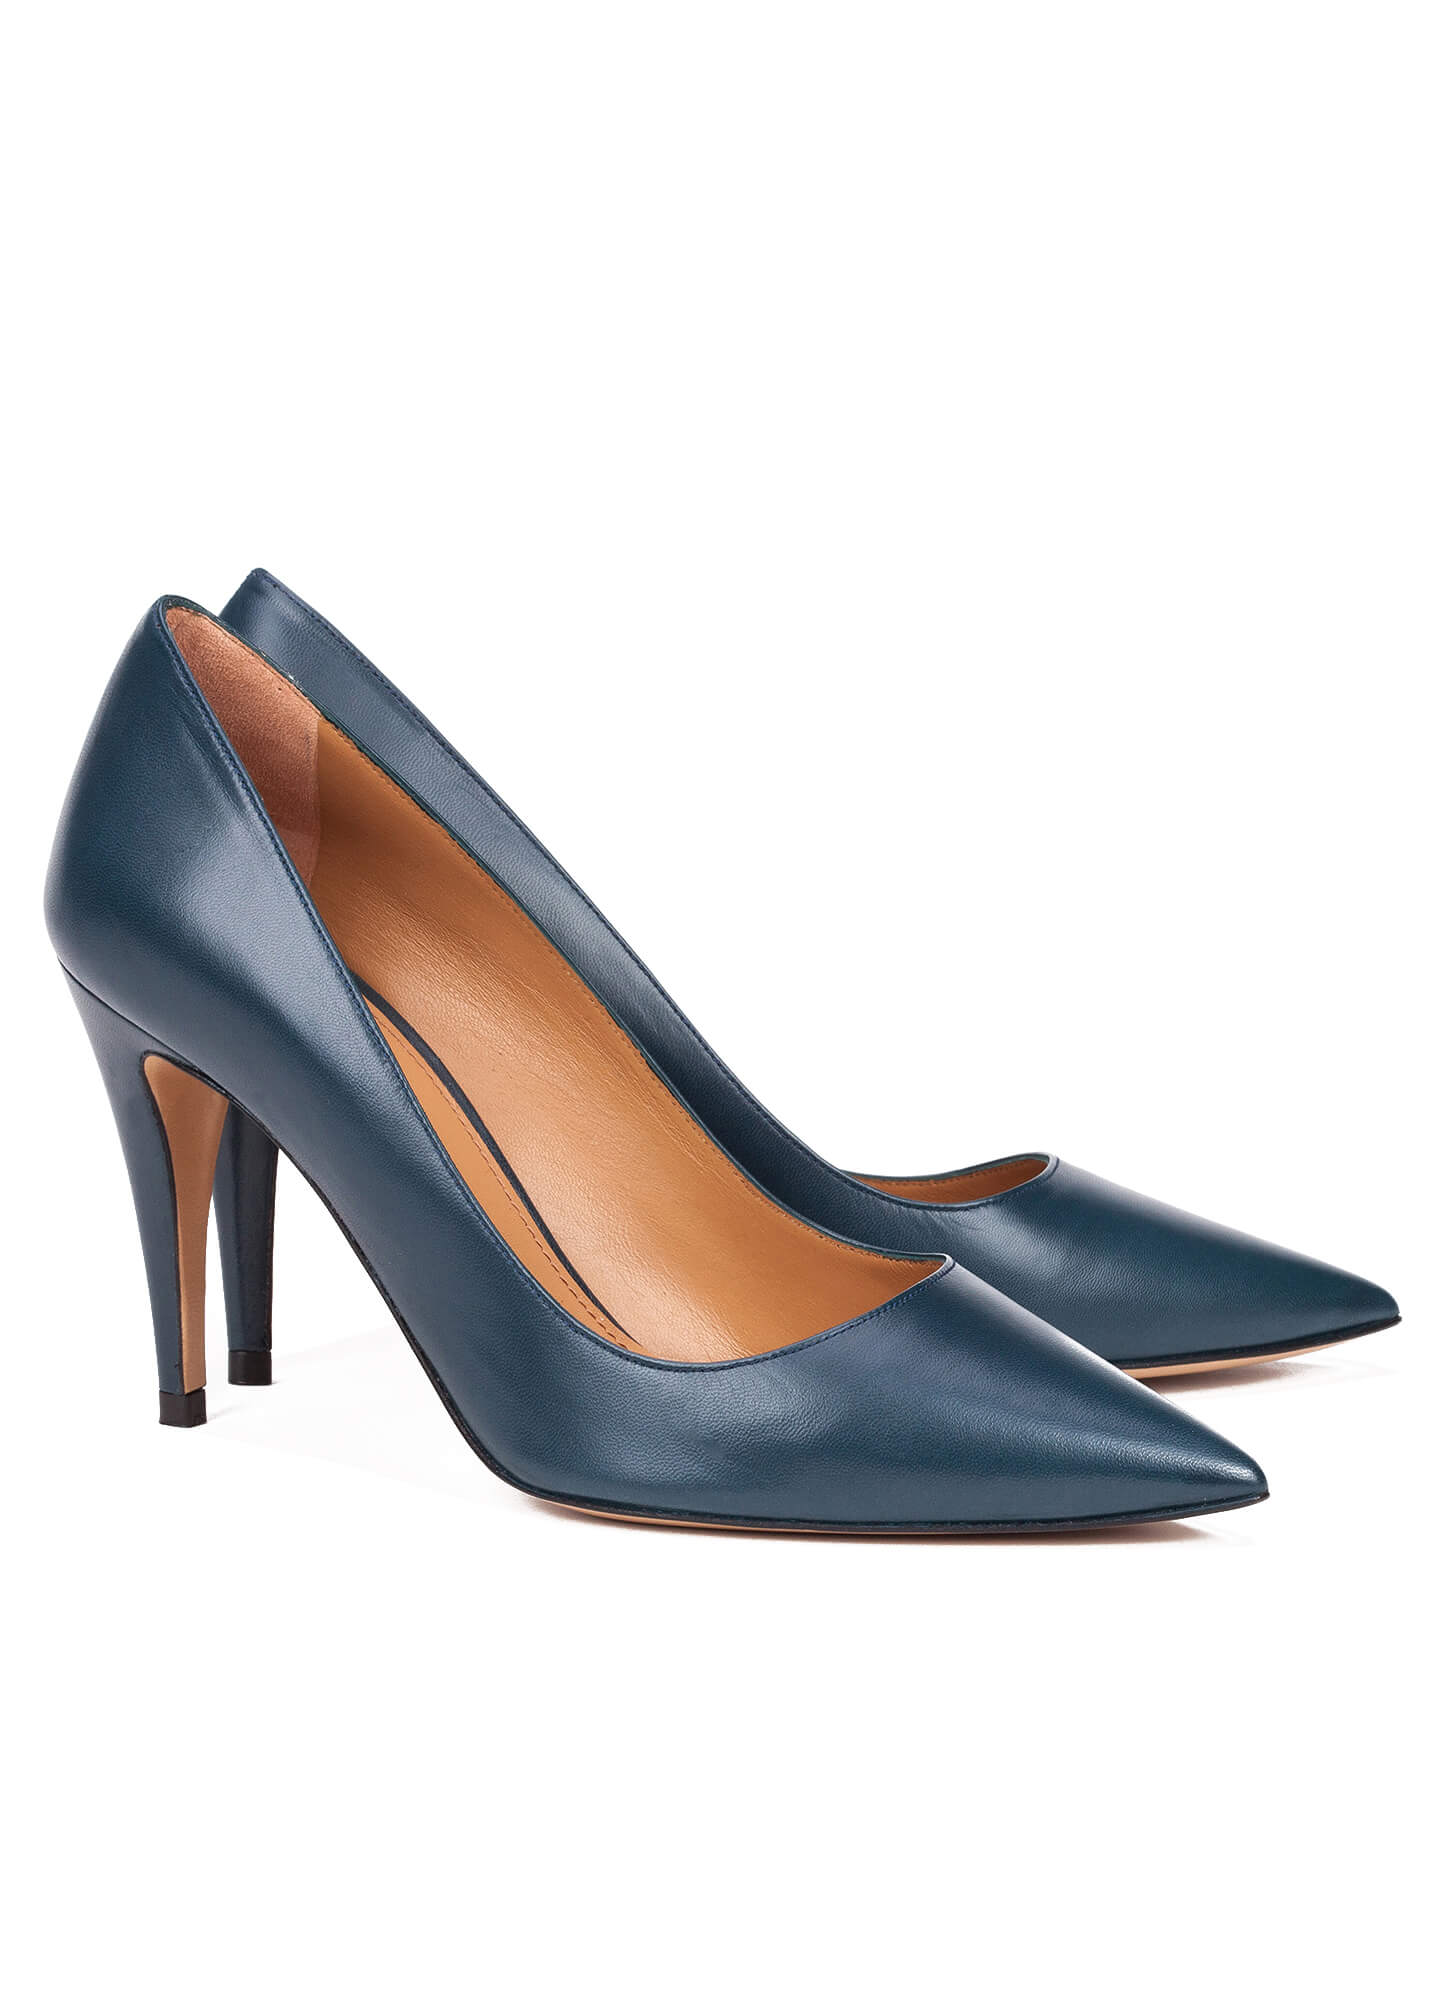 High heel pumps in blue leather - online shoe store Pura Lopez . PURA LOPEZ